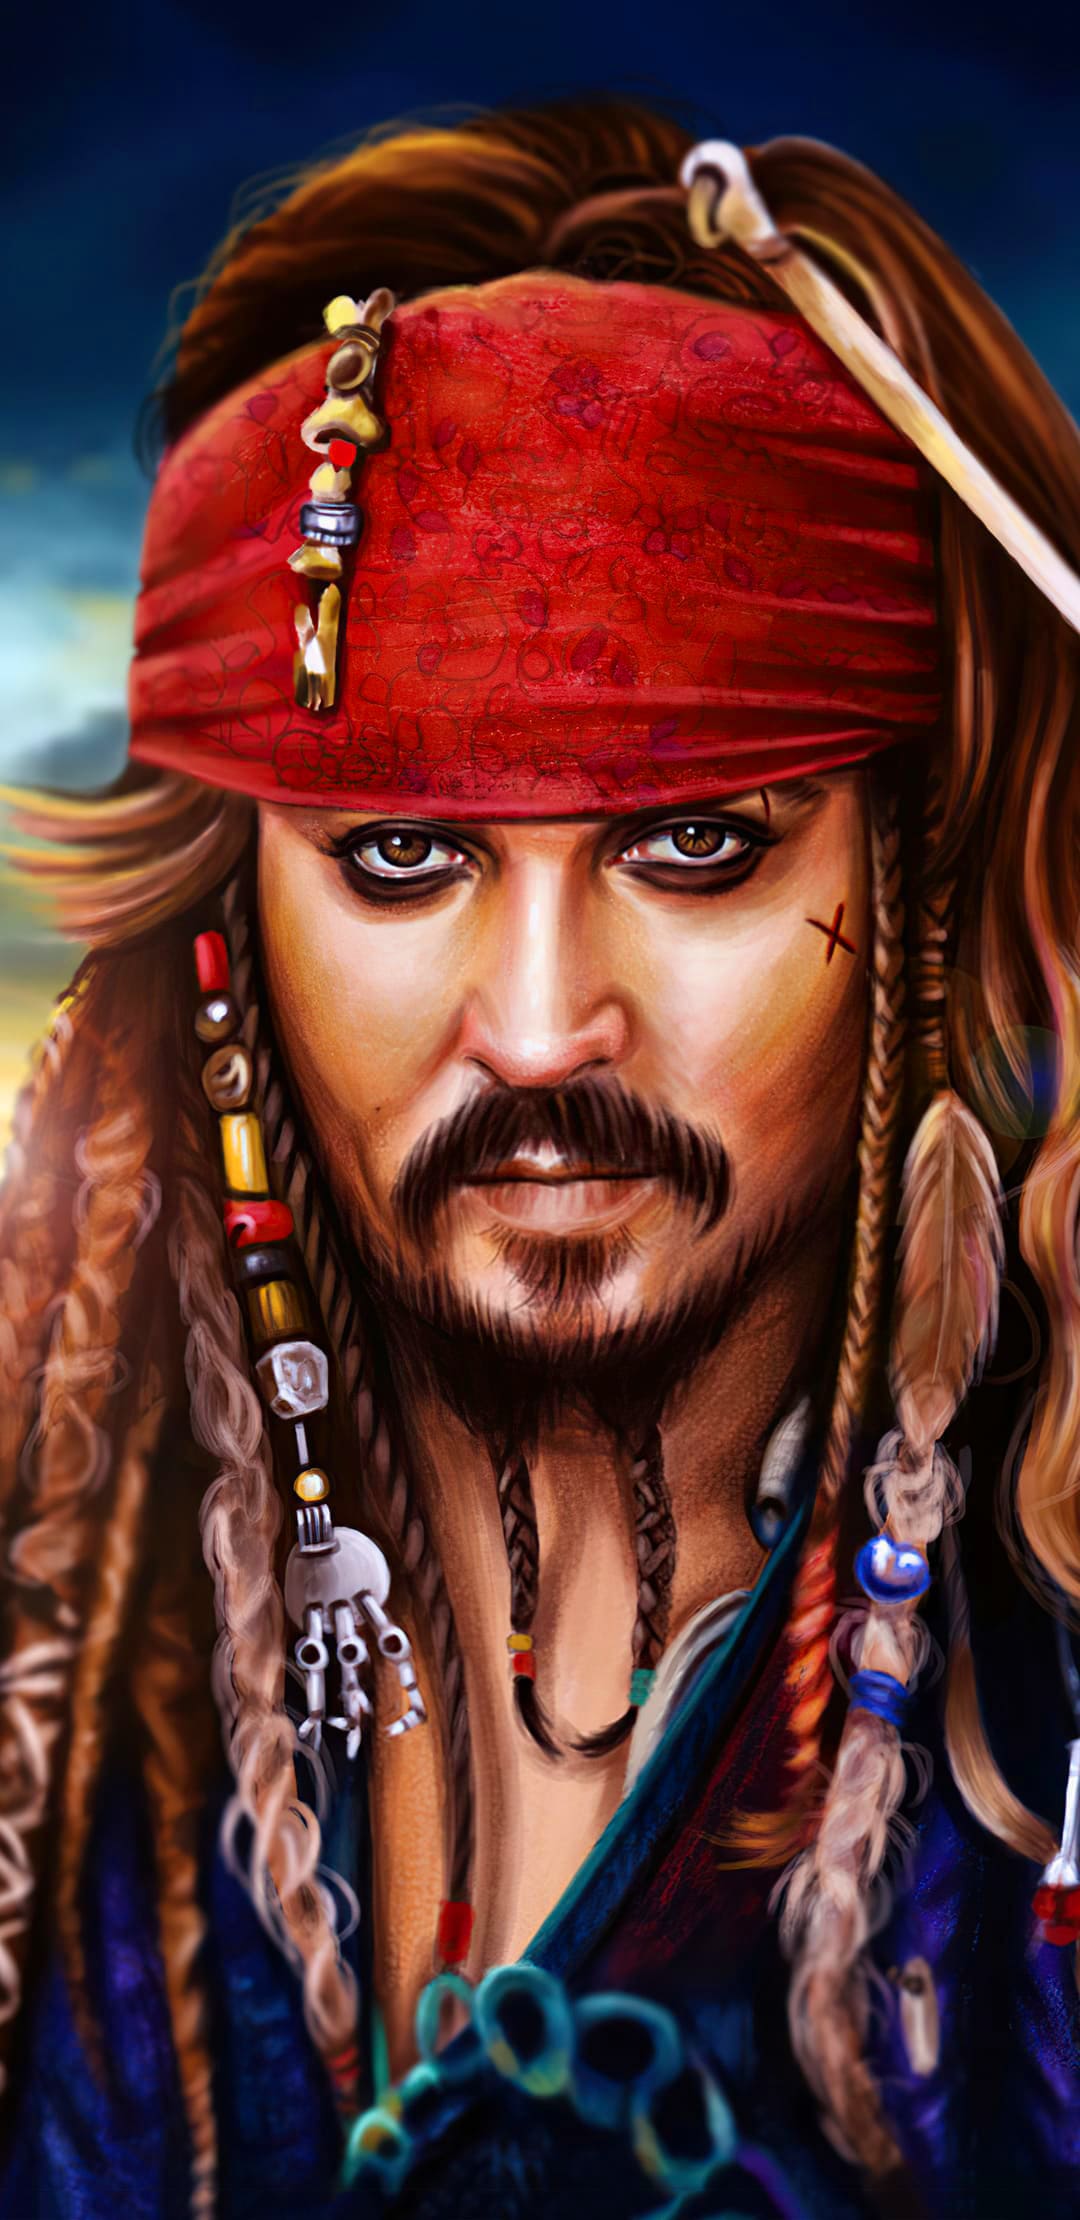 Captain Jack Sparrow Wallpaper by Bormoglot on DeviantArt